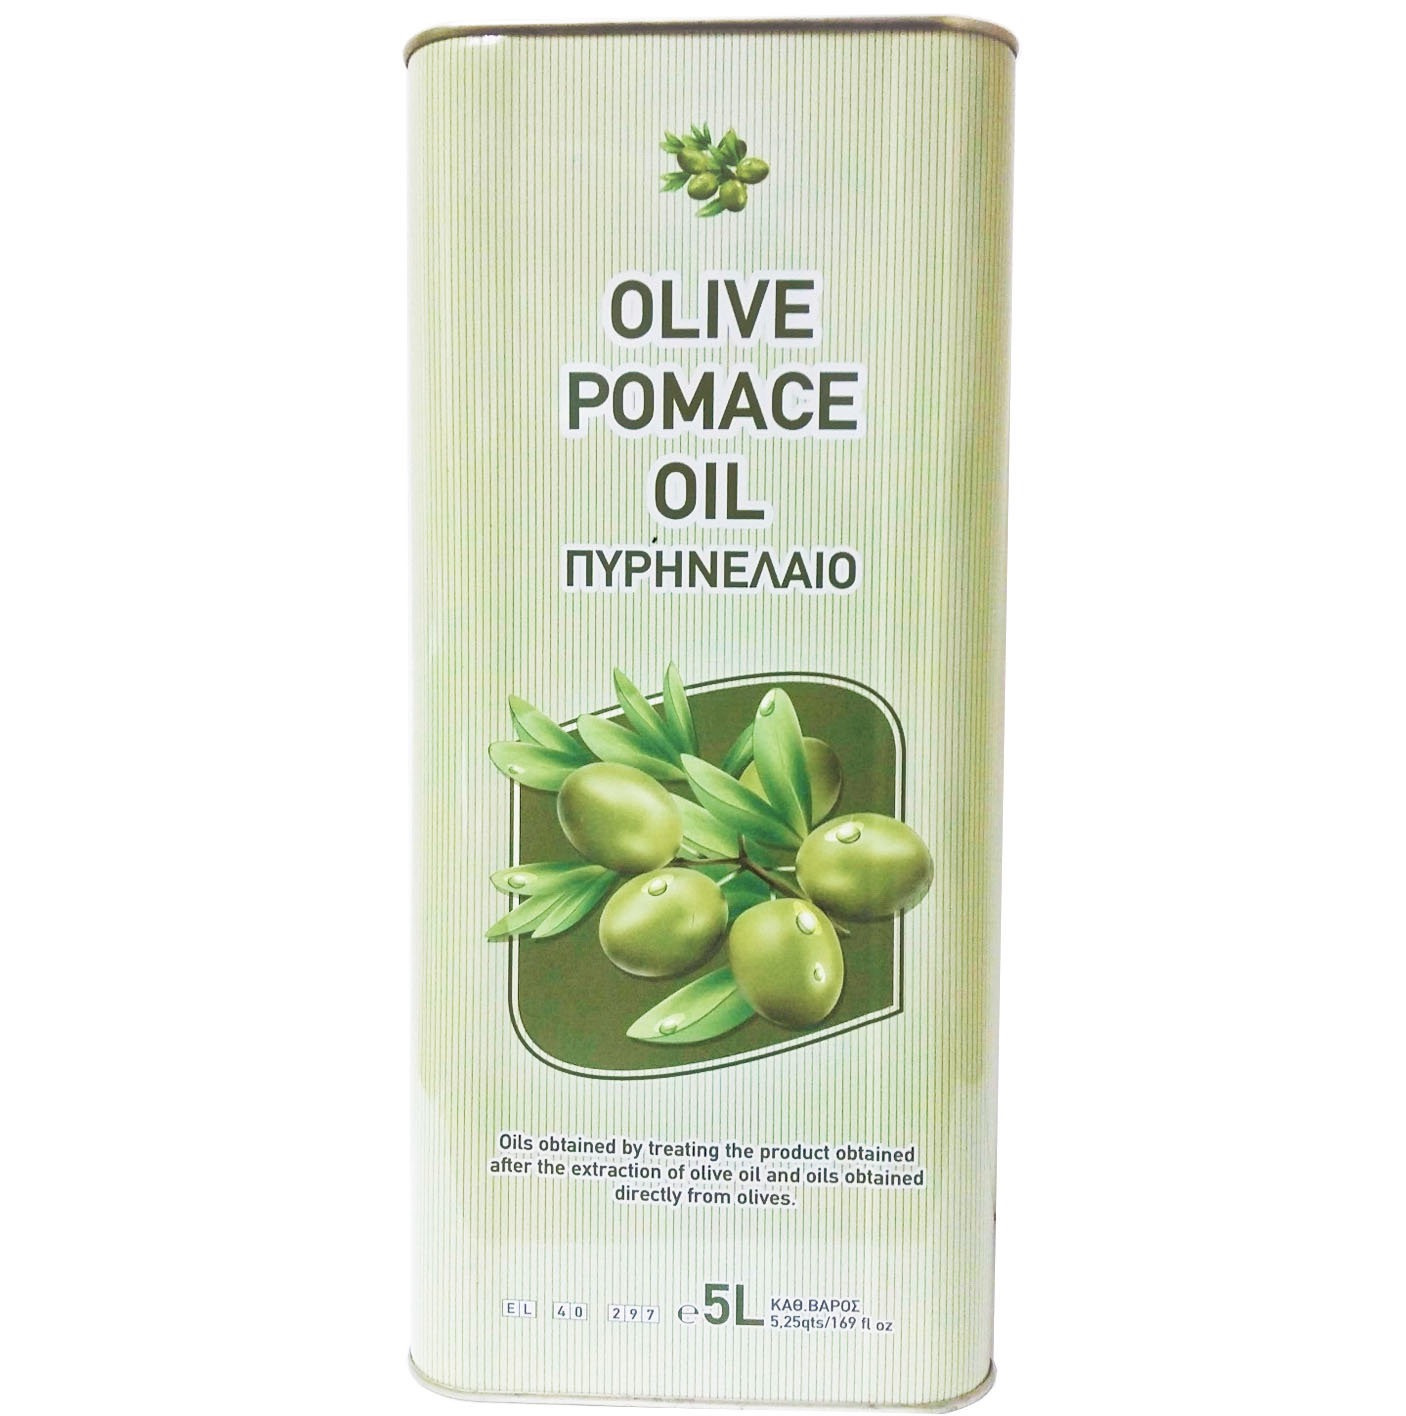 Оливковое масло колумб. DELPHI оливковое масло Pomace 5л жесть. DELPHI оливковое масло Pomace 1л пластик. Cretan Mill масло оливковое.